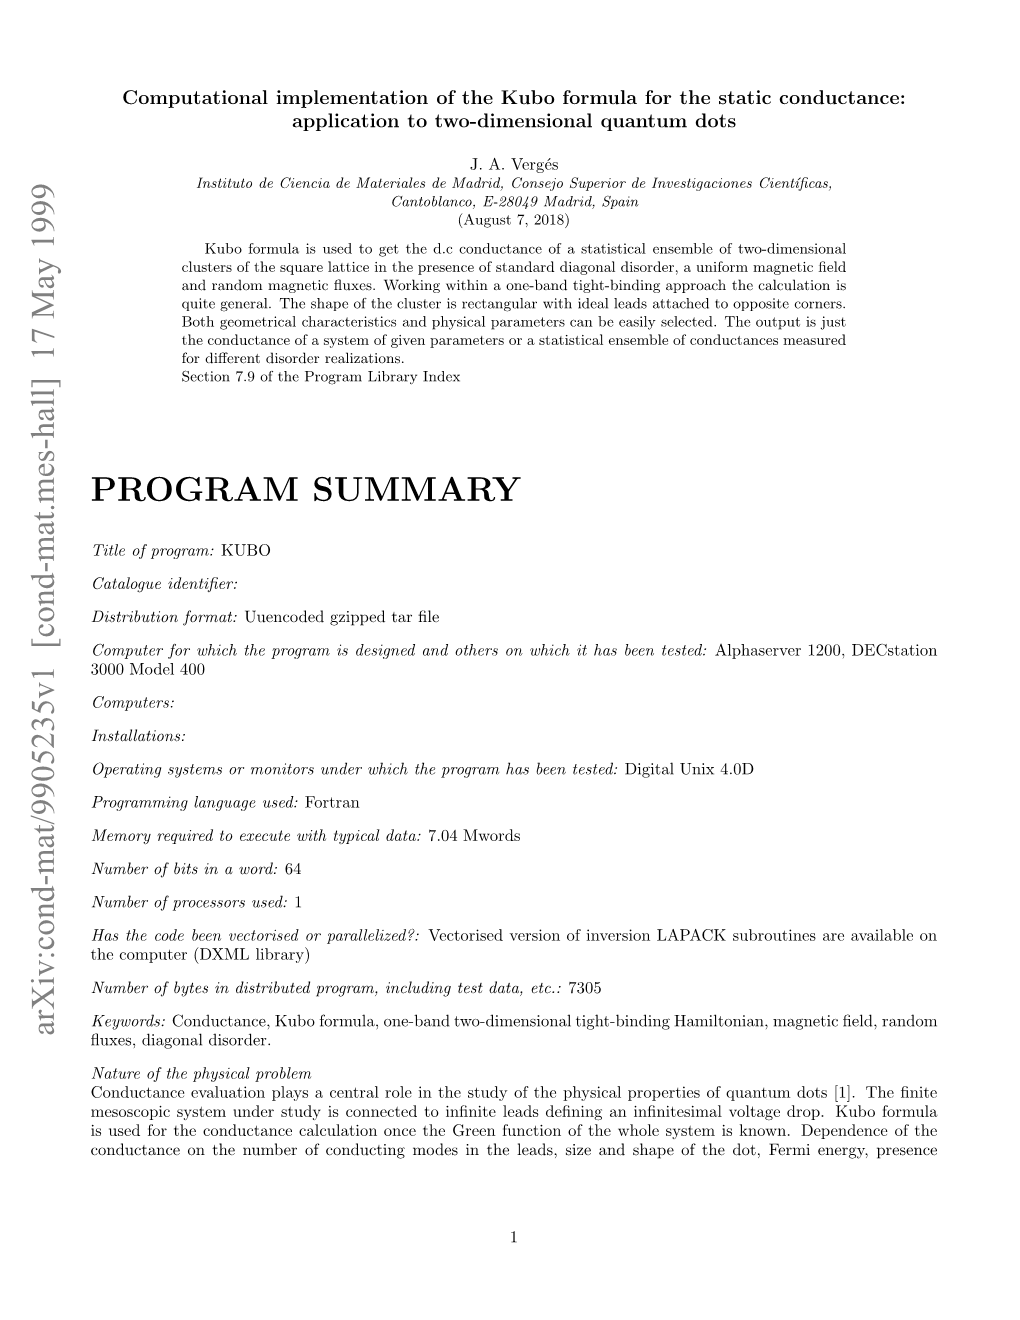 Computational Implementation of the Kubo Formula for the Static